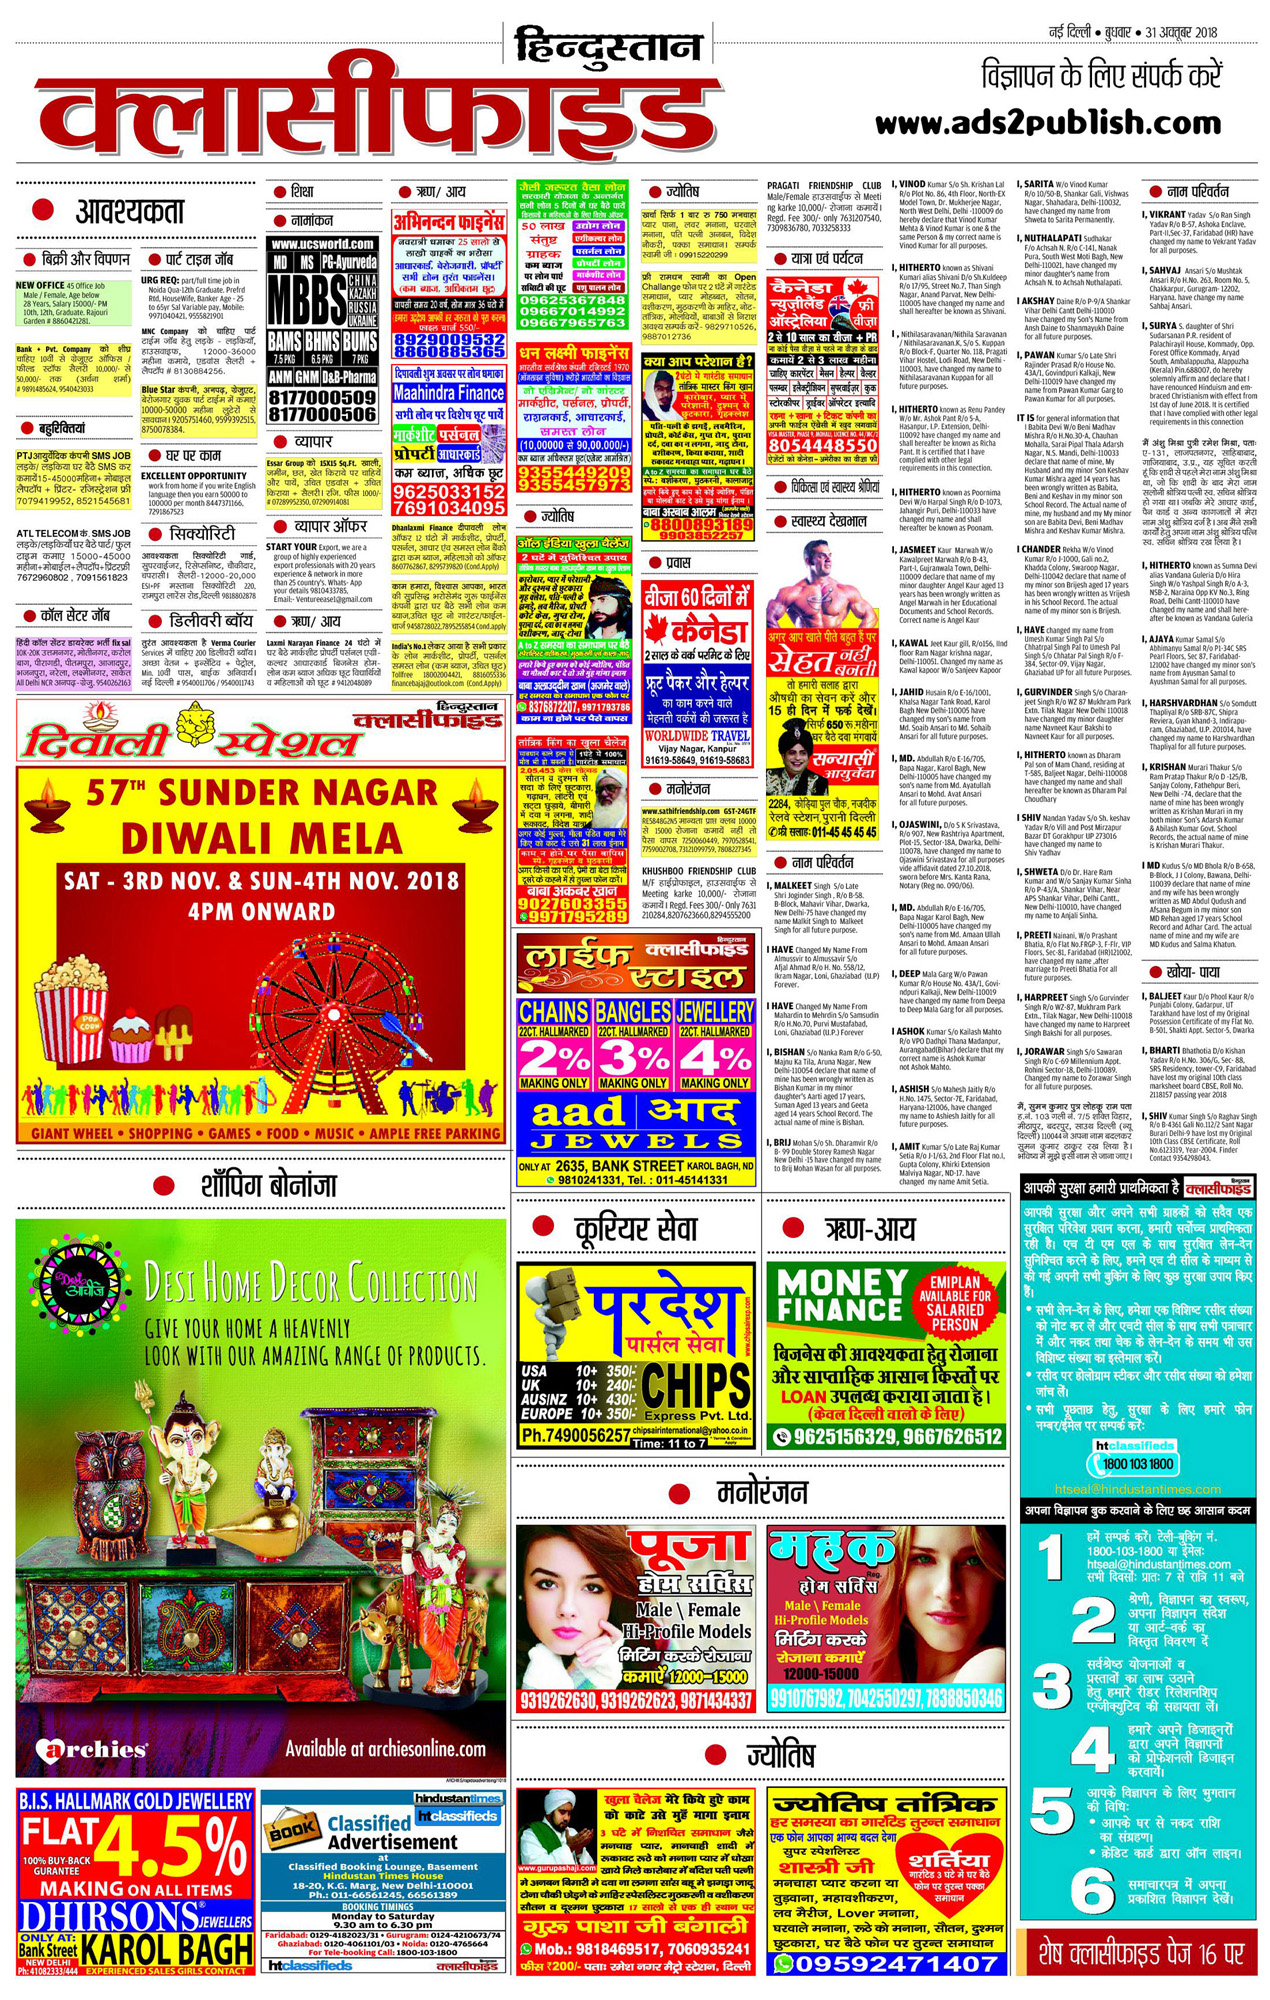 Hindustan Hindi Classified Delhi Page 31-10-2018 - Advert Gallery